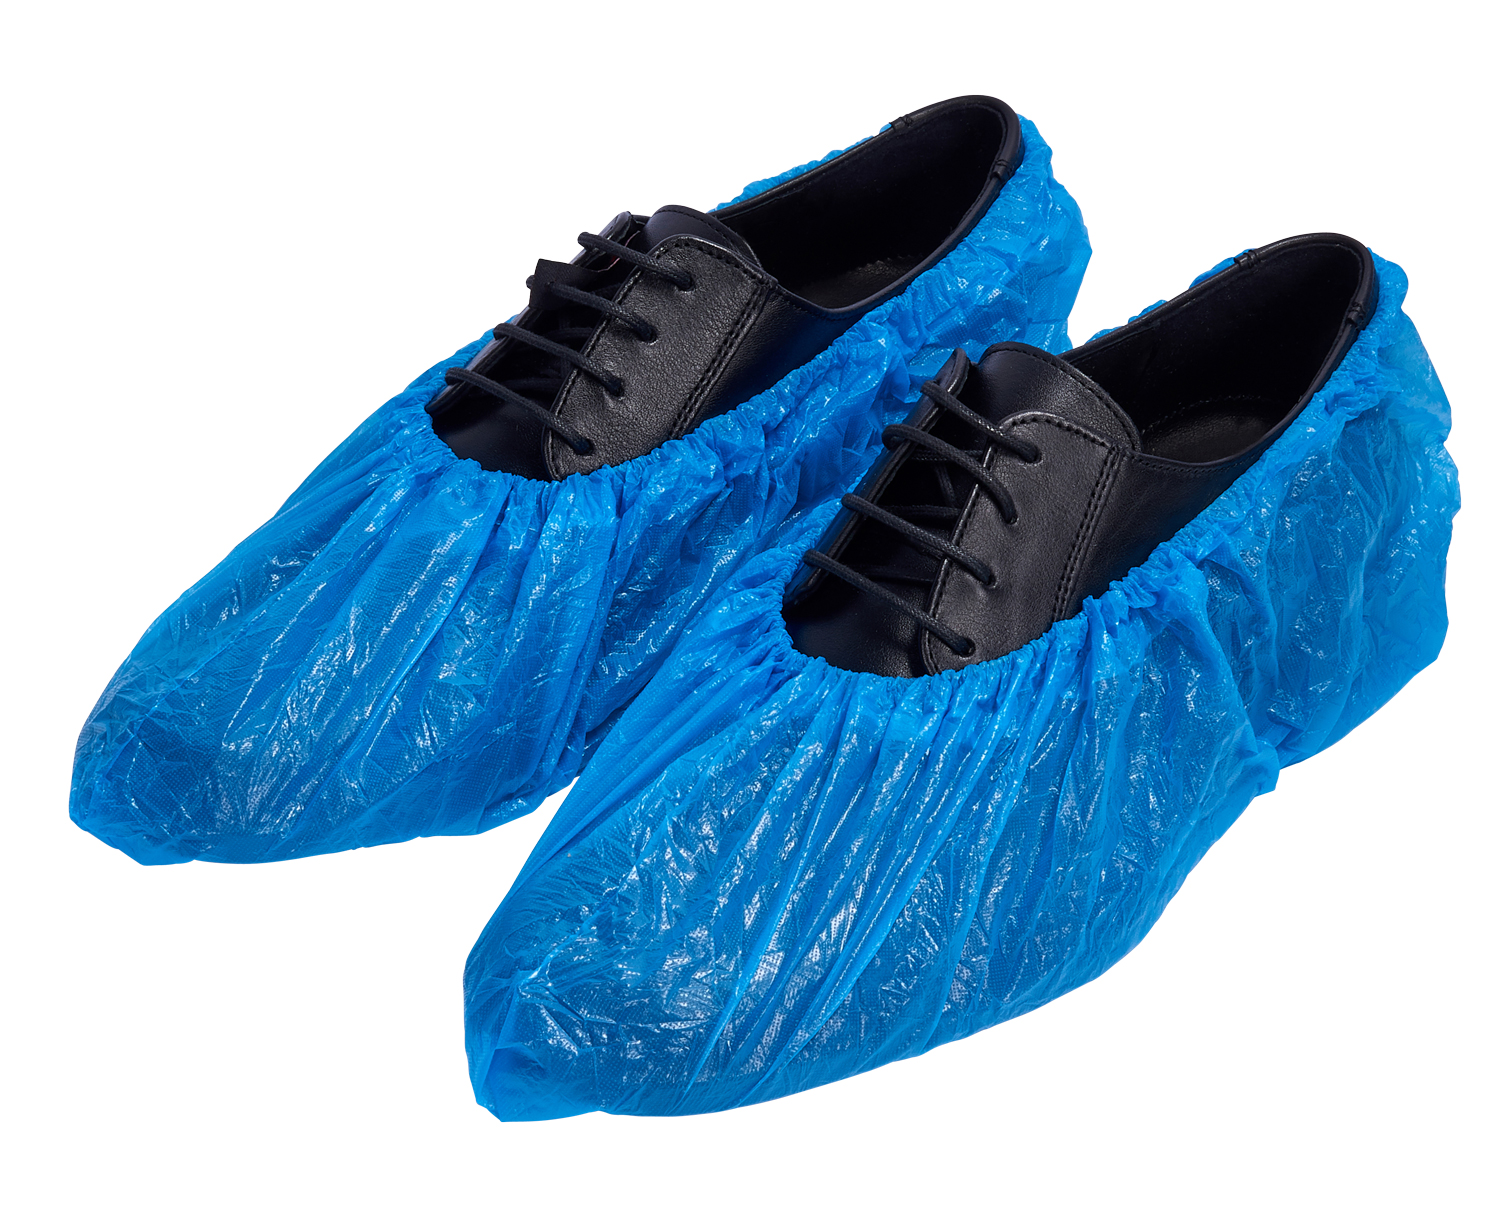 100 Überschuhe extra groß - blau - 15 x 41 cm - extra groß (PE Einmal OP  Schuhüberzieher Überziehschuhe Einwegüberschuh Schuhüberzug)